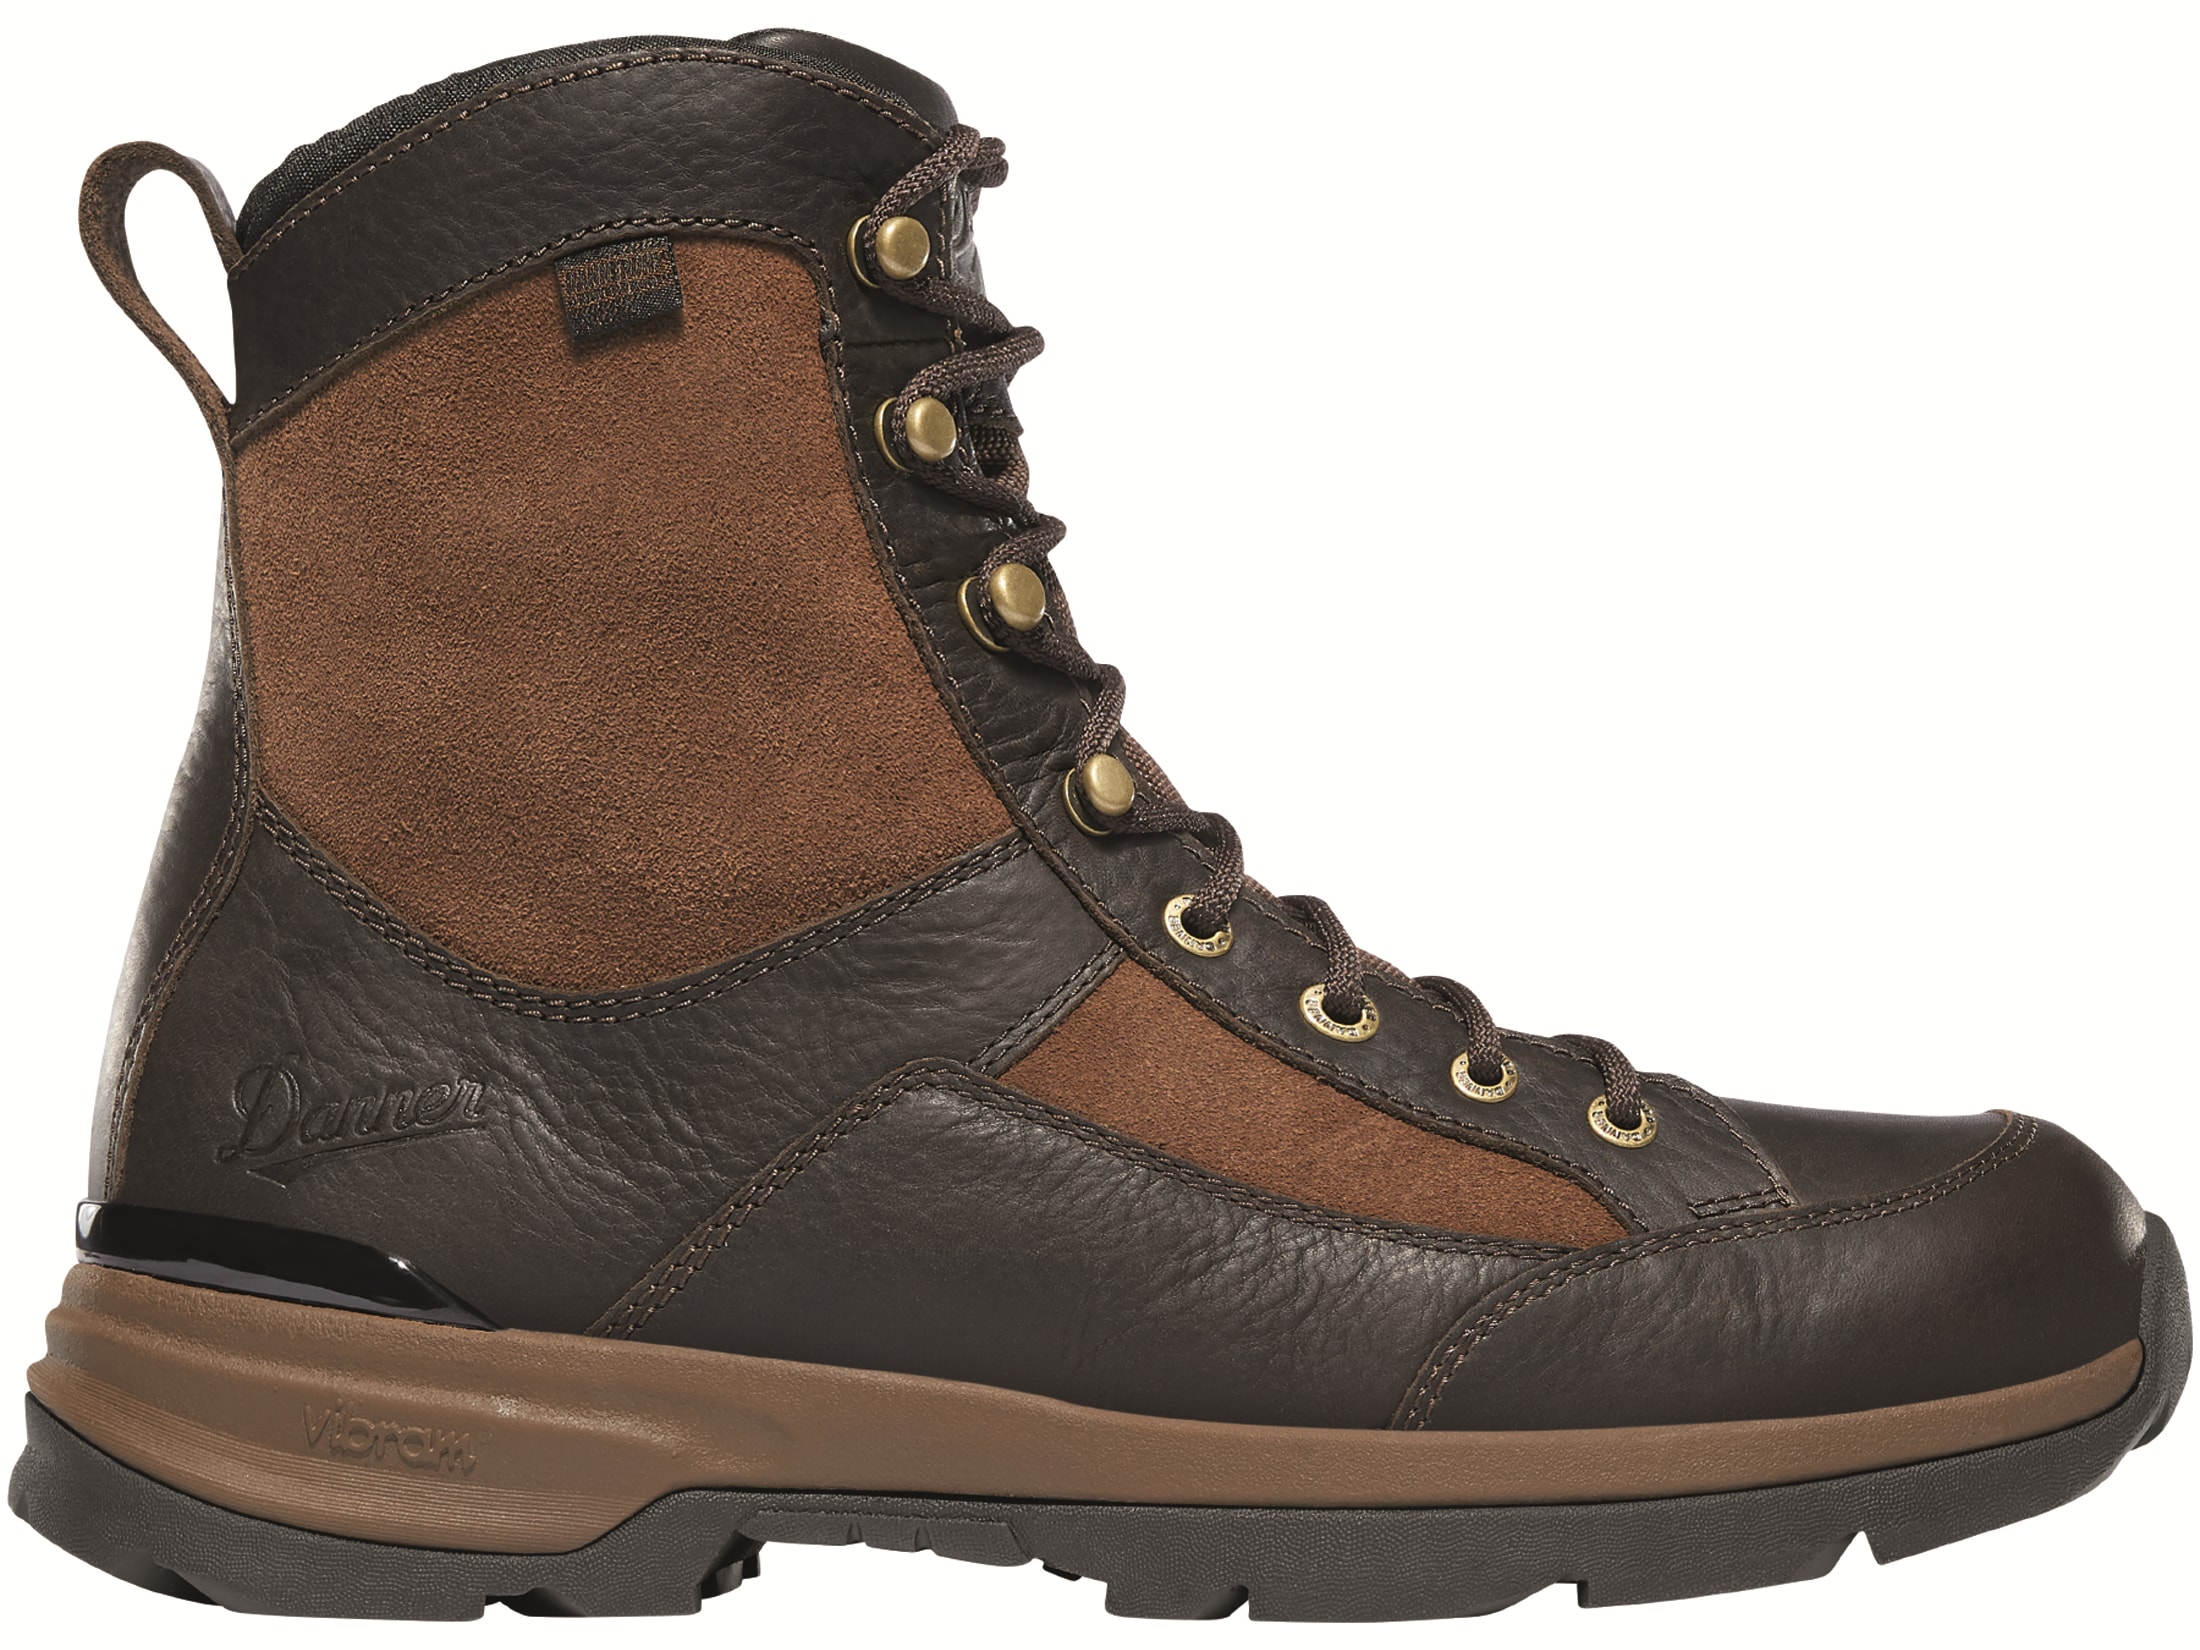 Danner Recurve 7 Waterproof Hunting Boots Leather/Nylon Mossy Oak